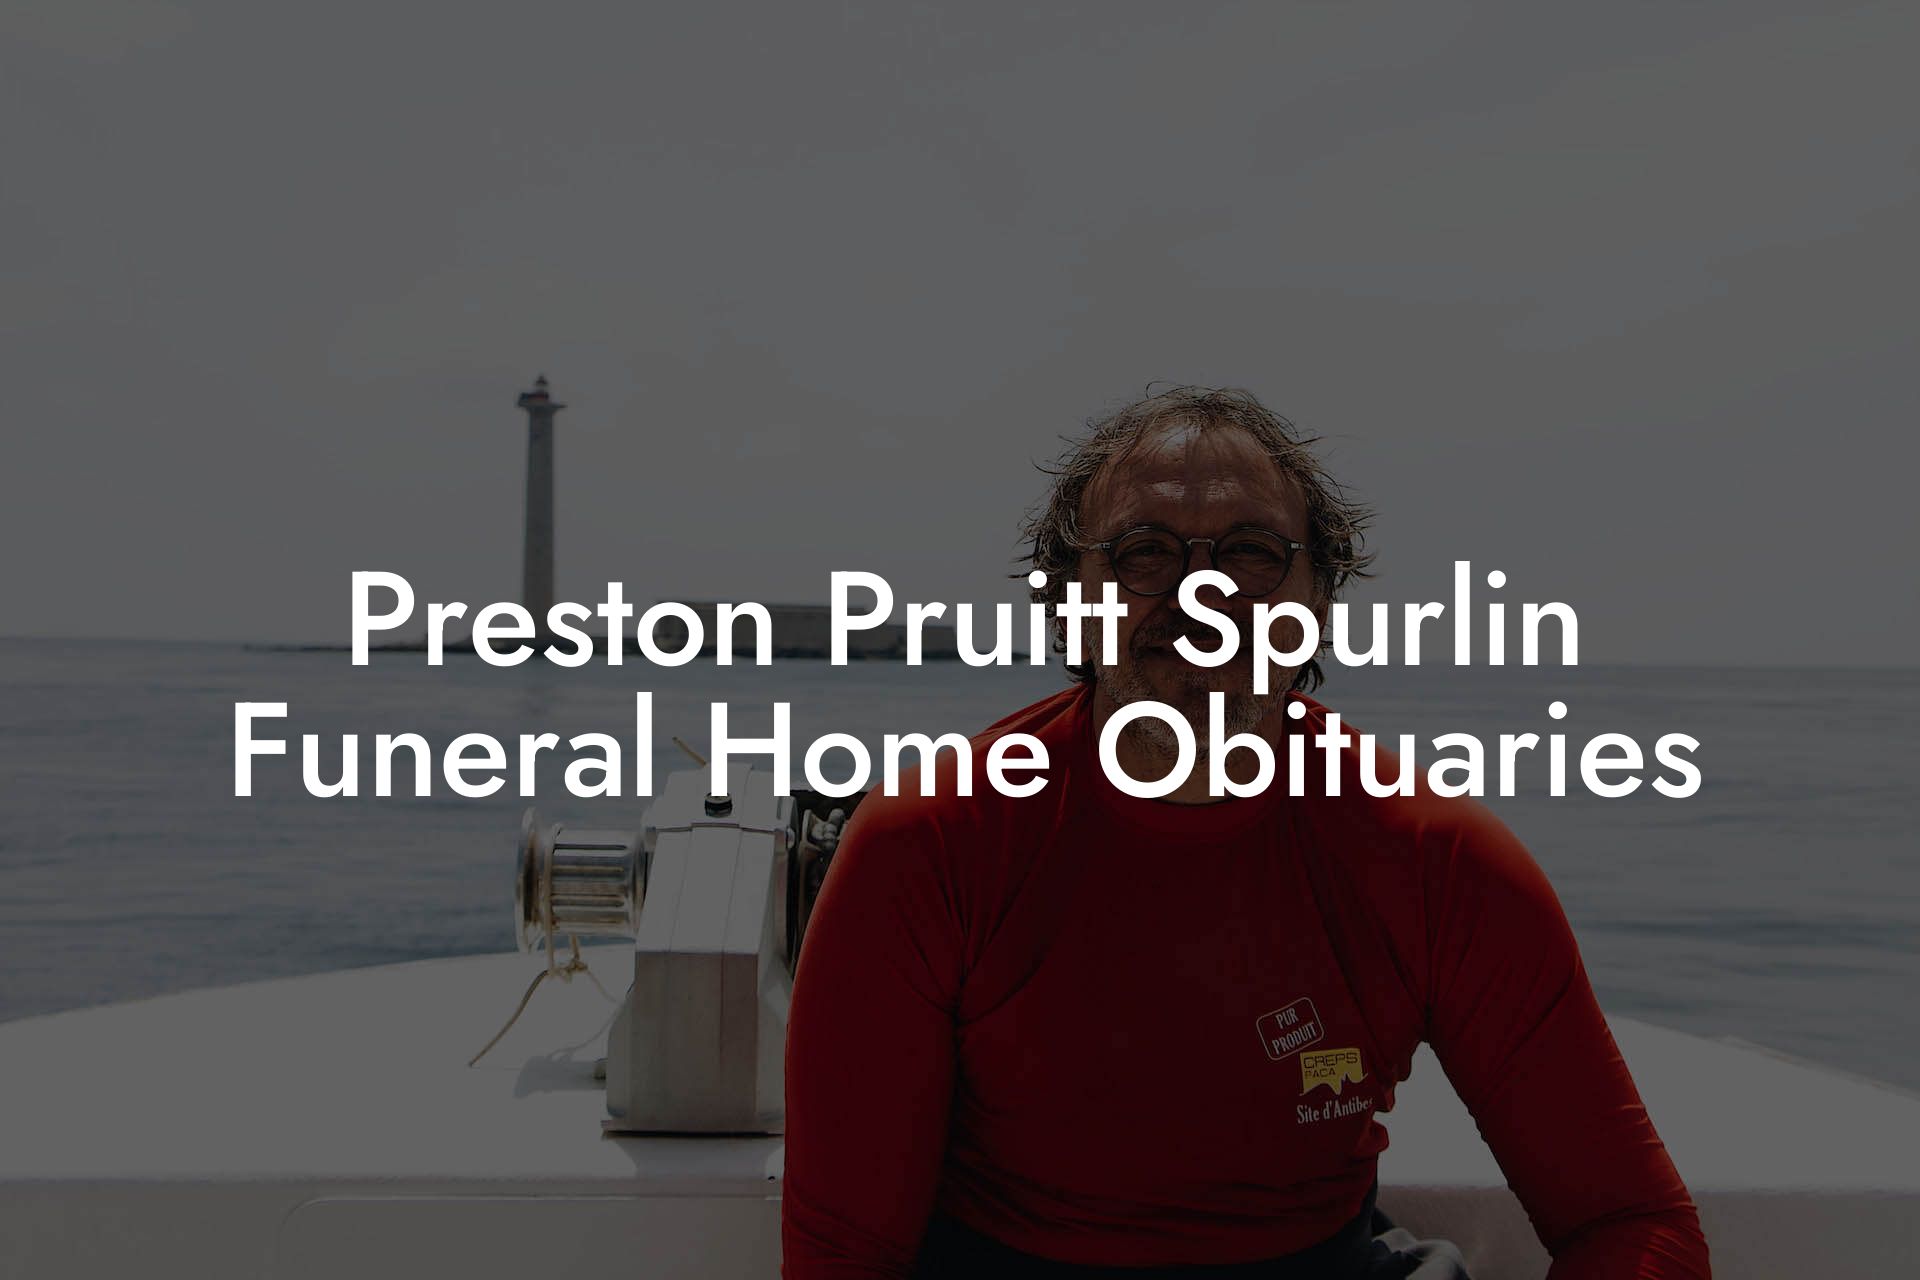 Preston Pruitt Spurlin Funeral Home Obituaries